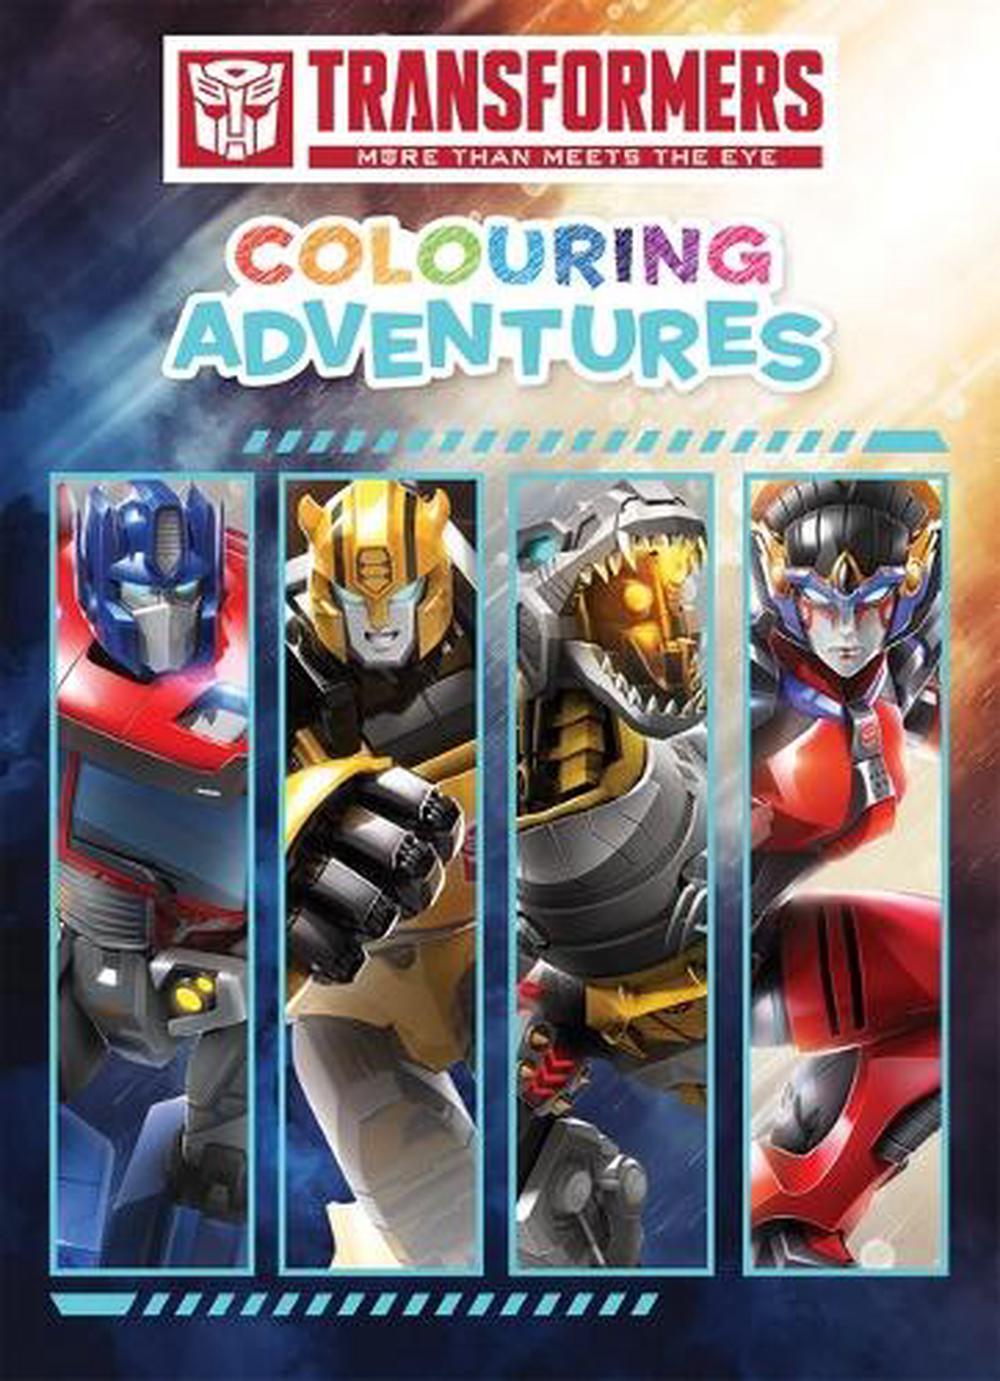 Transformers Colouring Adventure